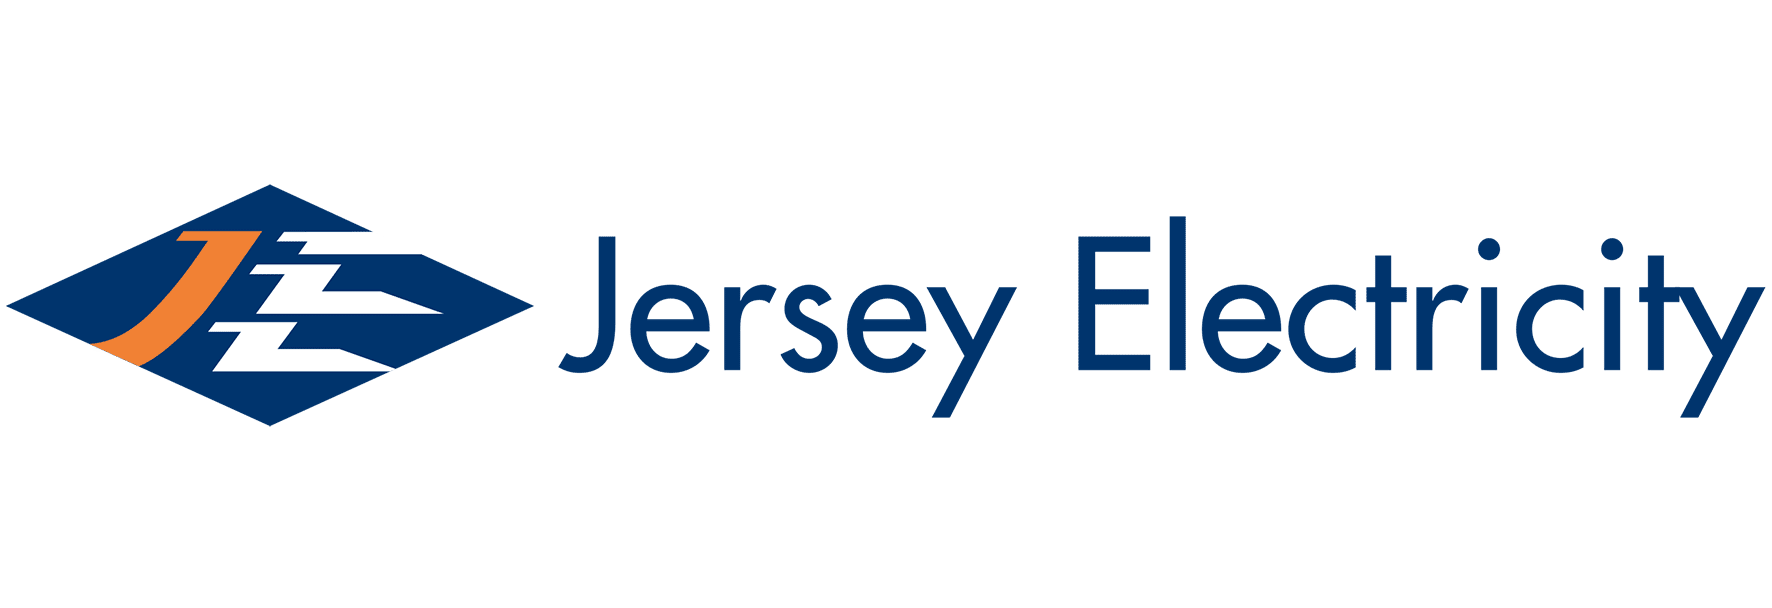 Jersey_Electricity_Company_logo